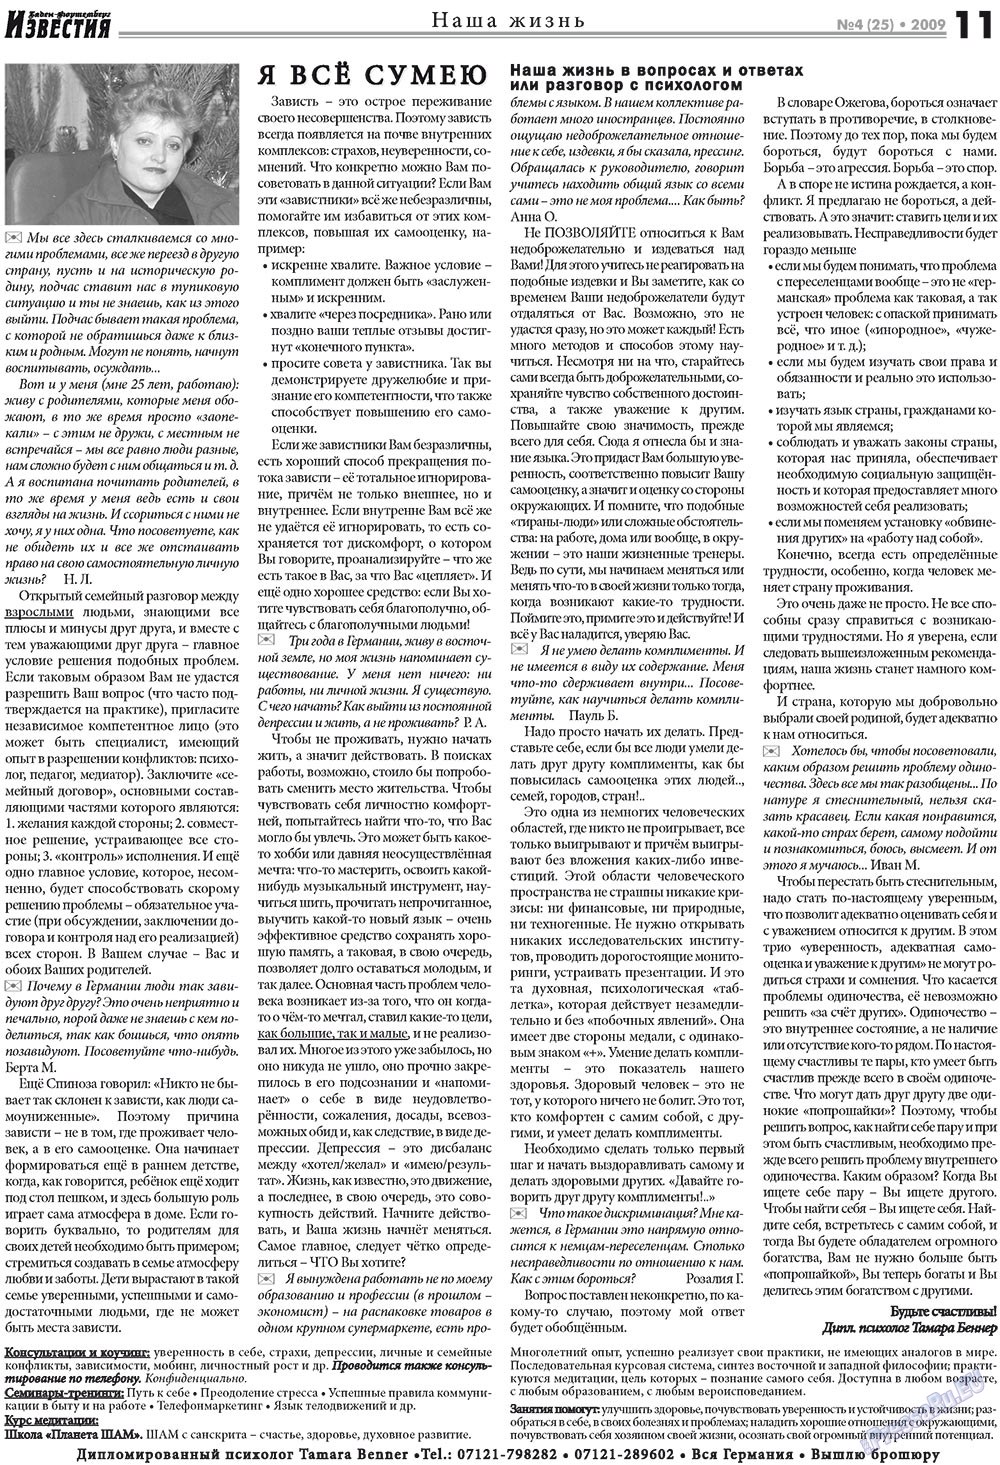 Известия BW (газета). 2009 год, номер 4, стр. 11